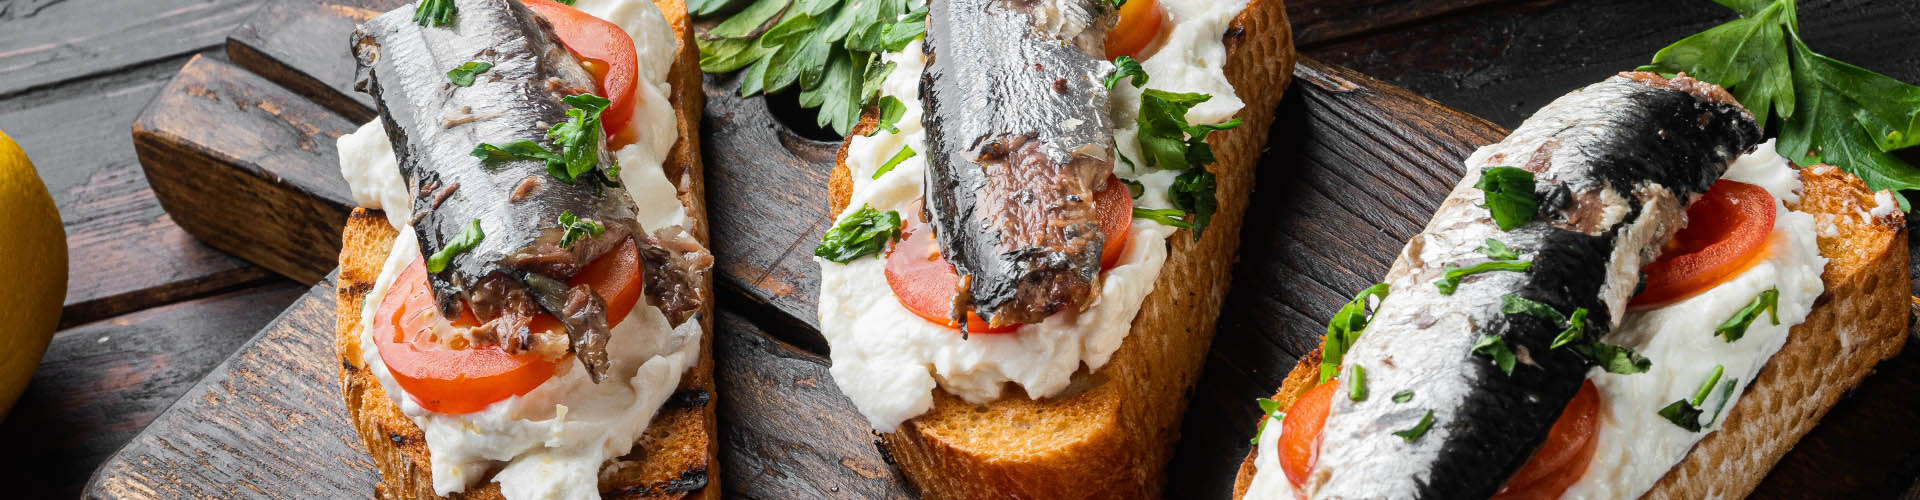 Sardines Prevent Type 2 Diabetes - sardine sandwich